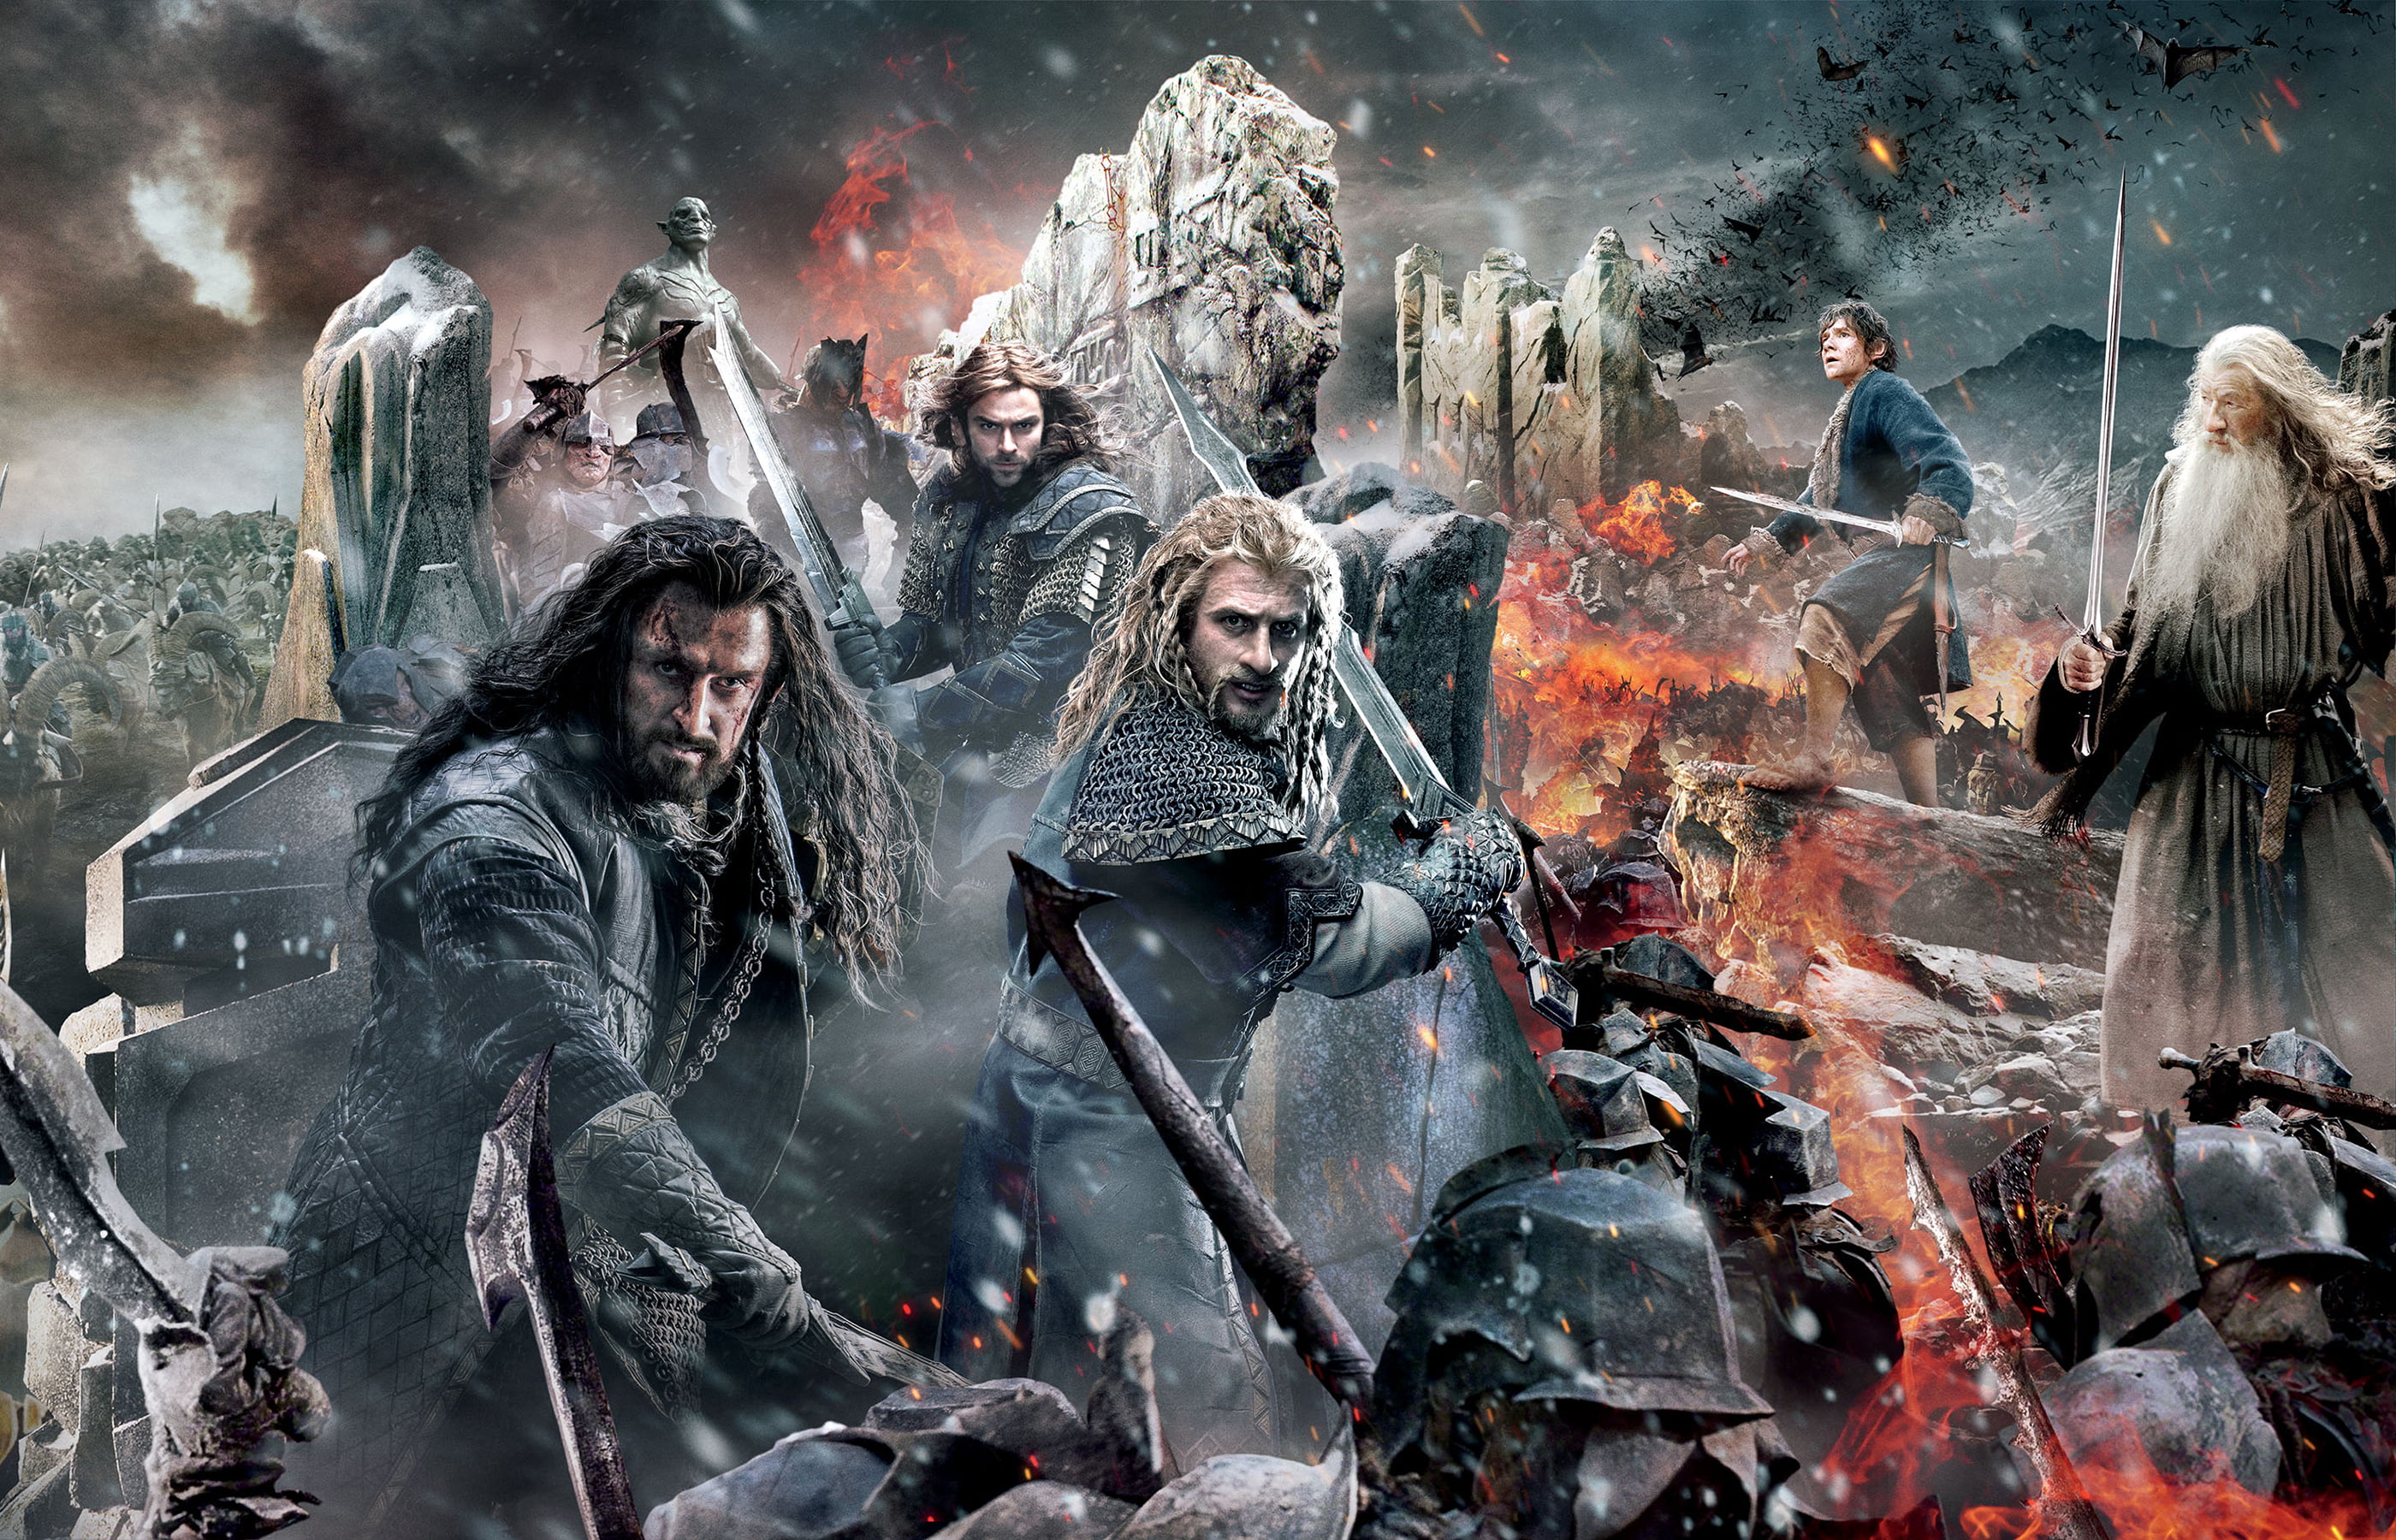 Lord of the Rings poster, Sky, Fire, Men, Wallpaper, Baggins